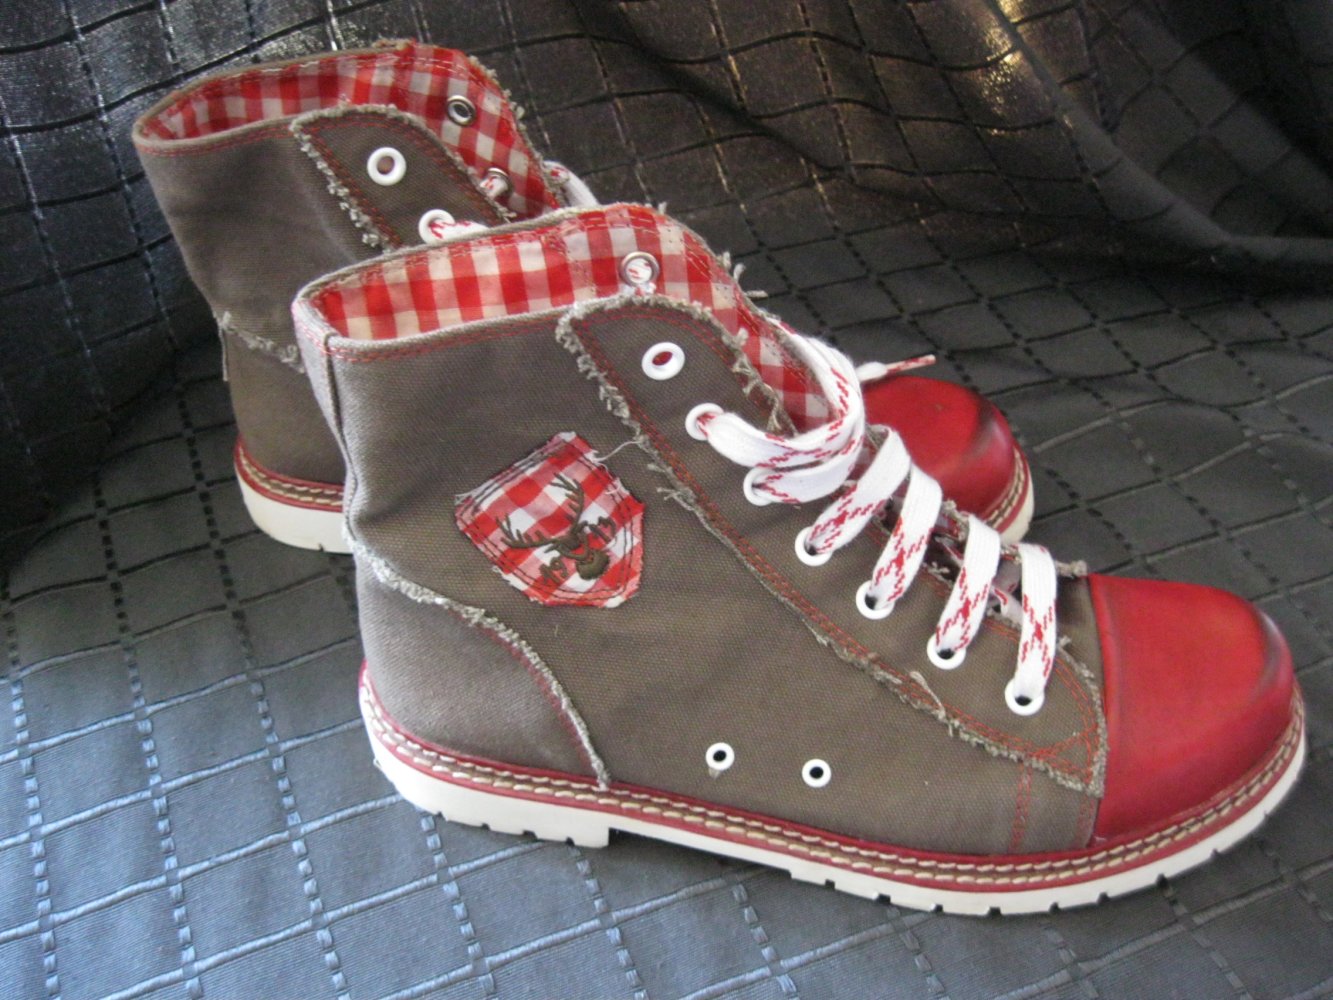 Spieth & Wensky Damen Boots/Sneaker Jacky braun/rot Schnürung 41